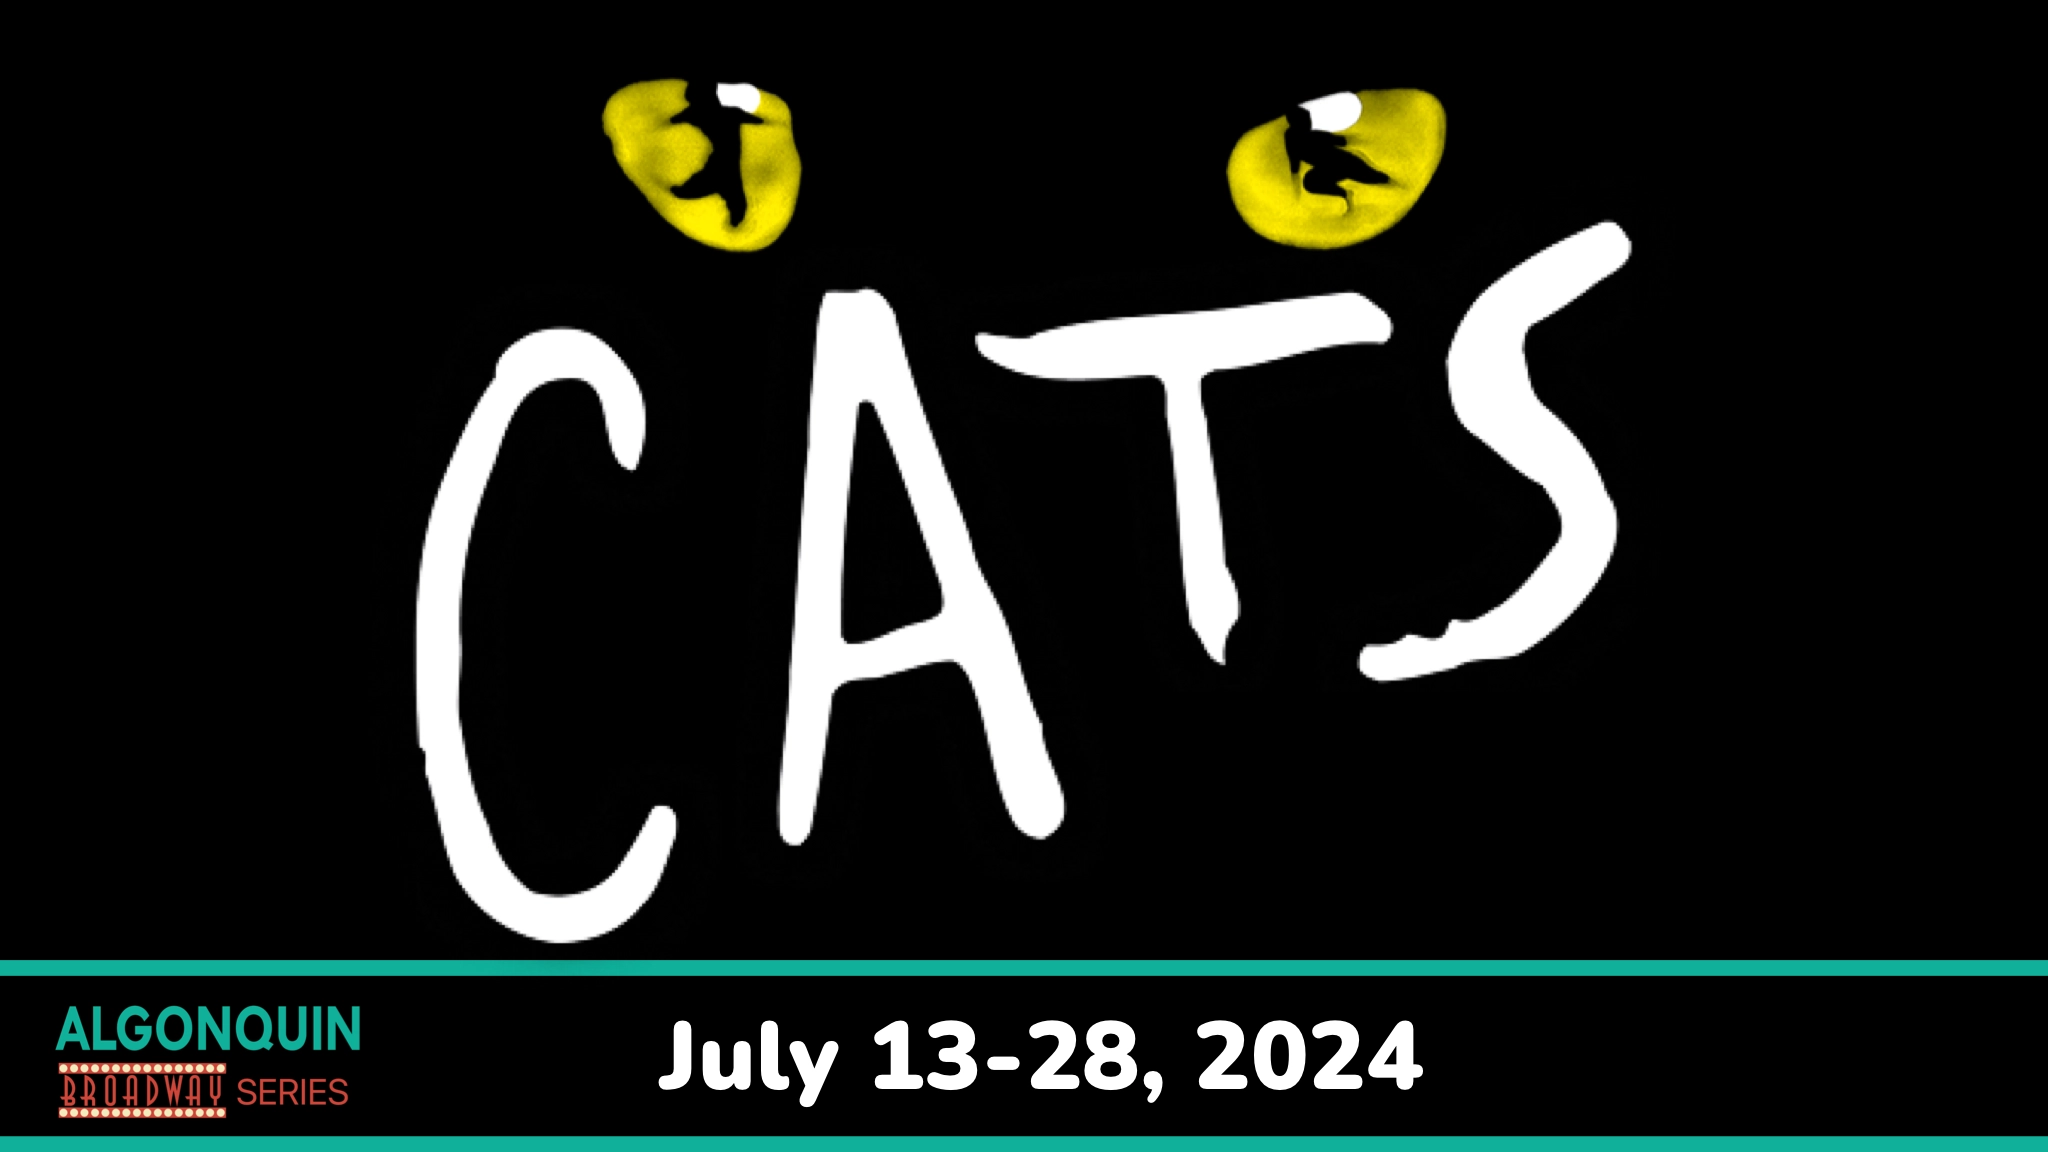 Algonquin Arts Theatre Announces Casting and Creative Team for CATS